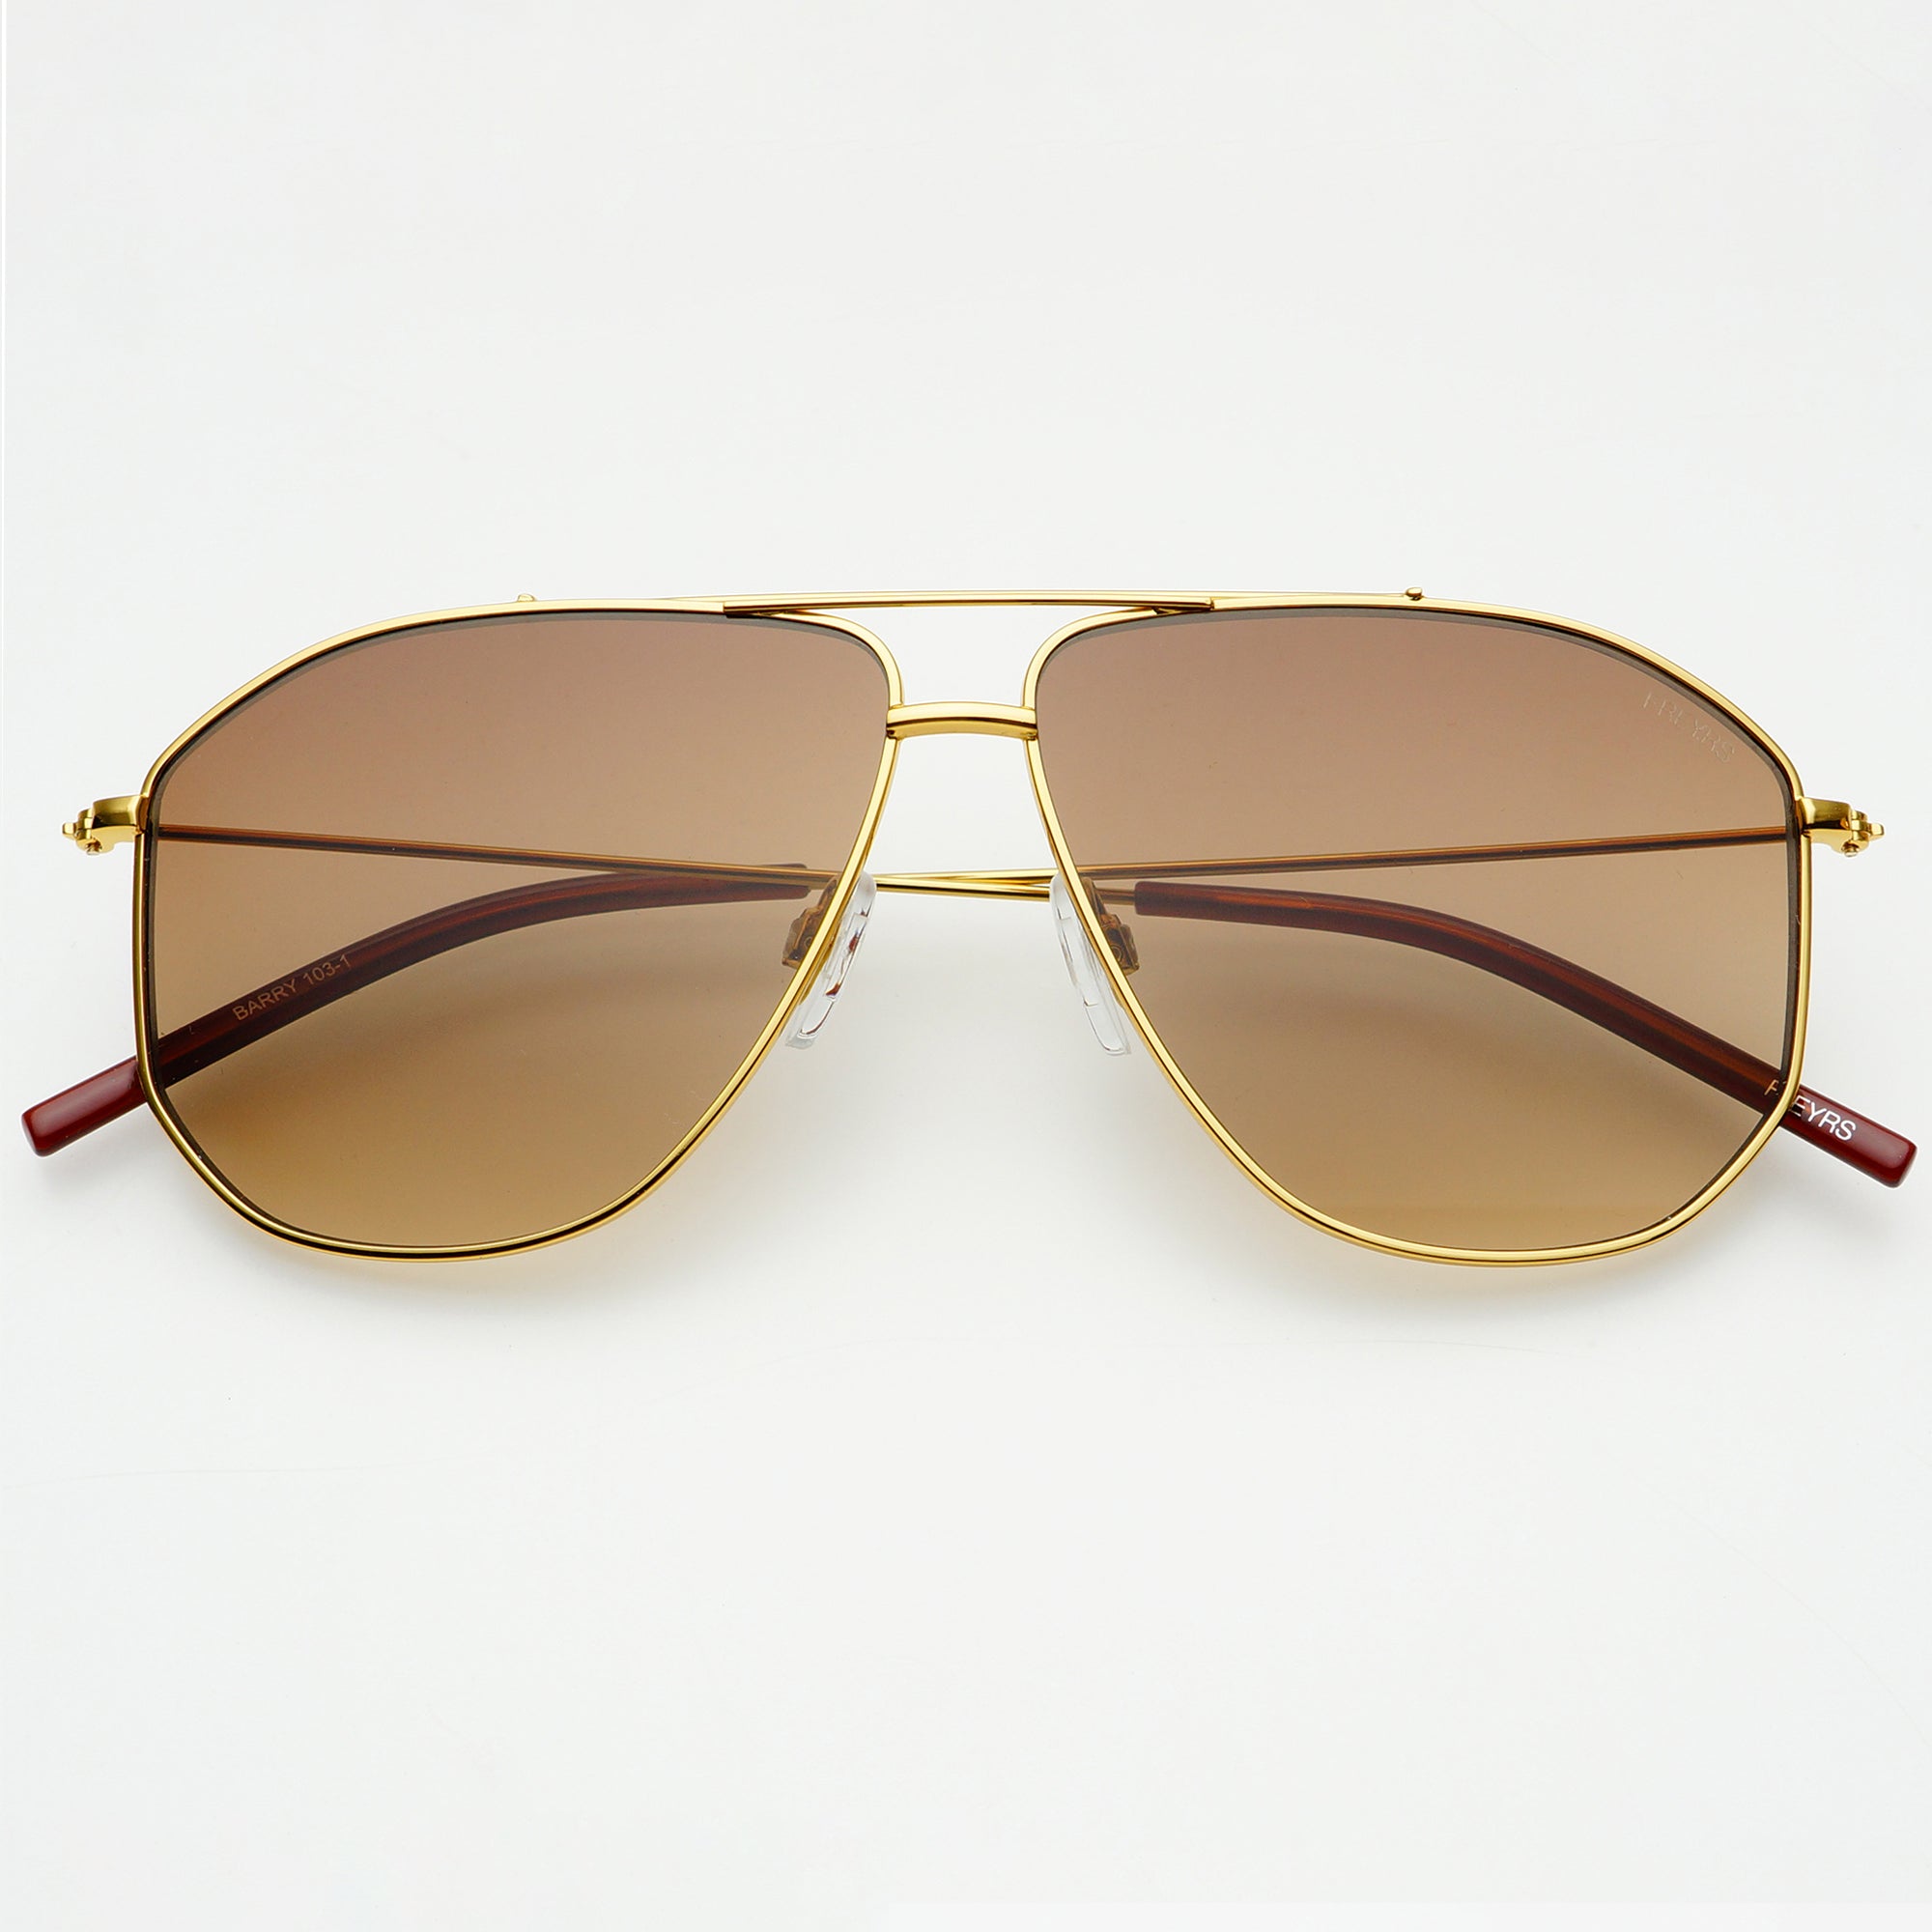 Freyrs Eyewear - Cosmo Sunglasses - Brown